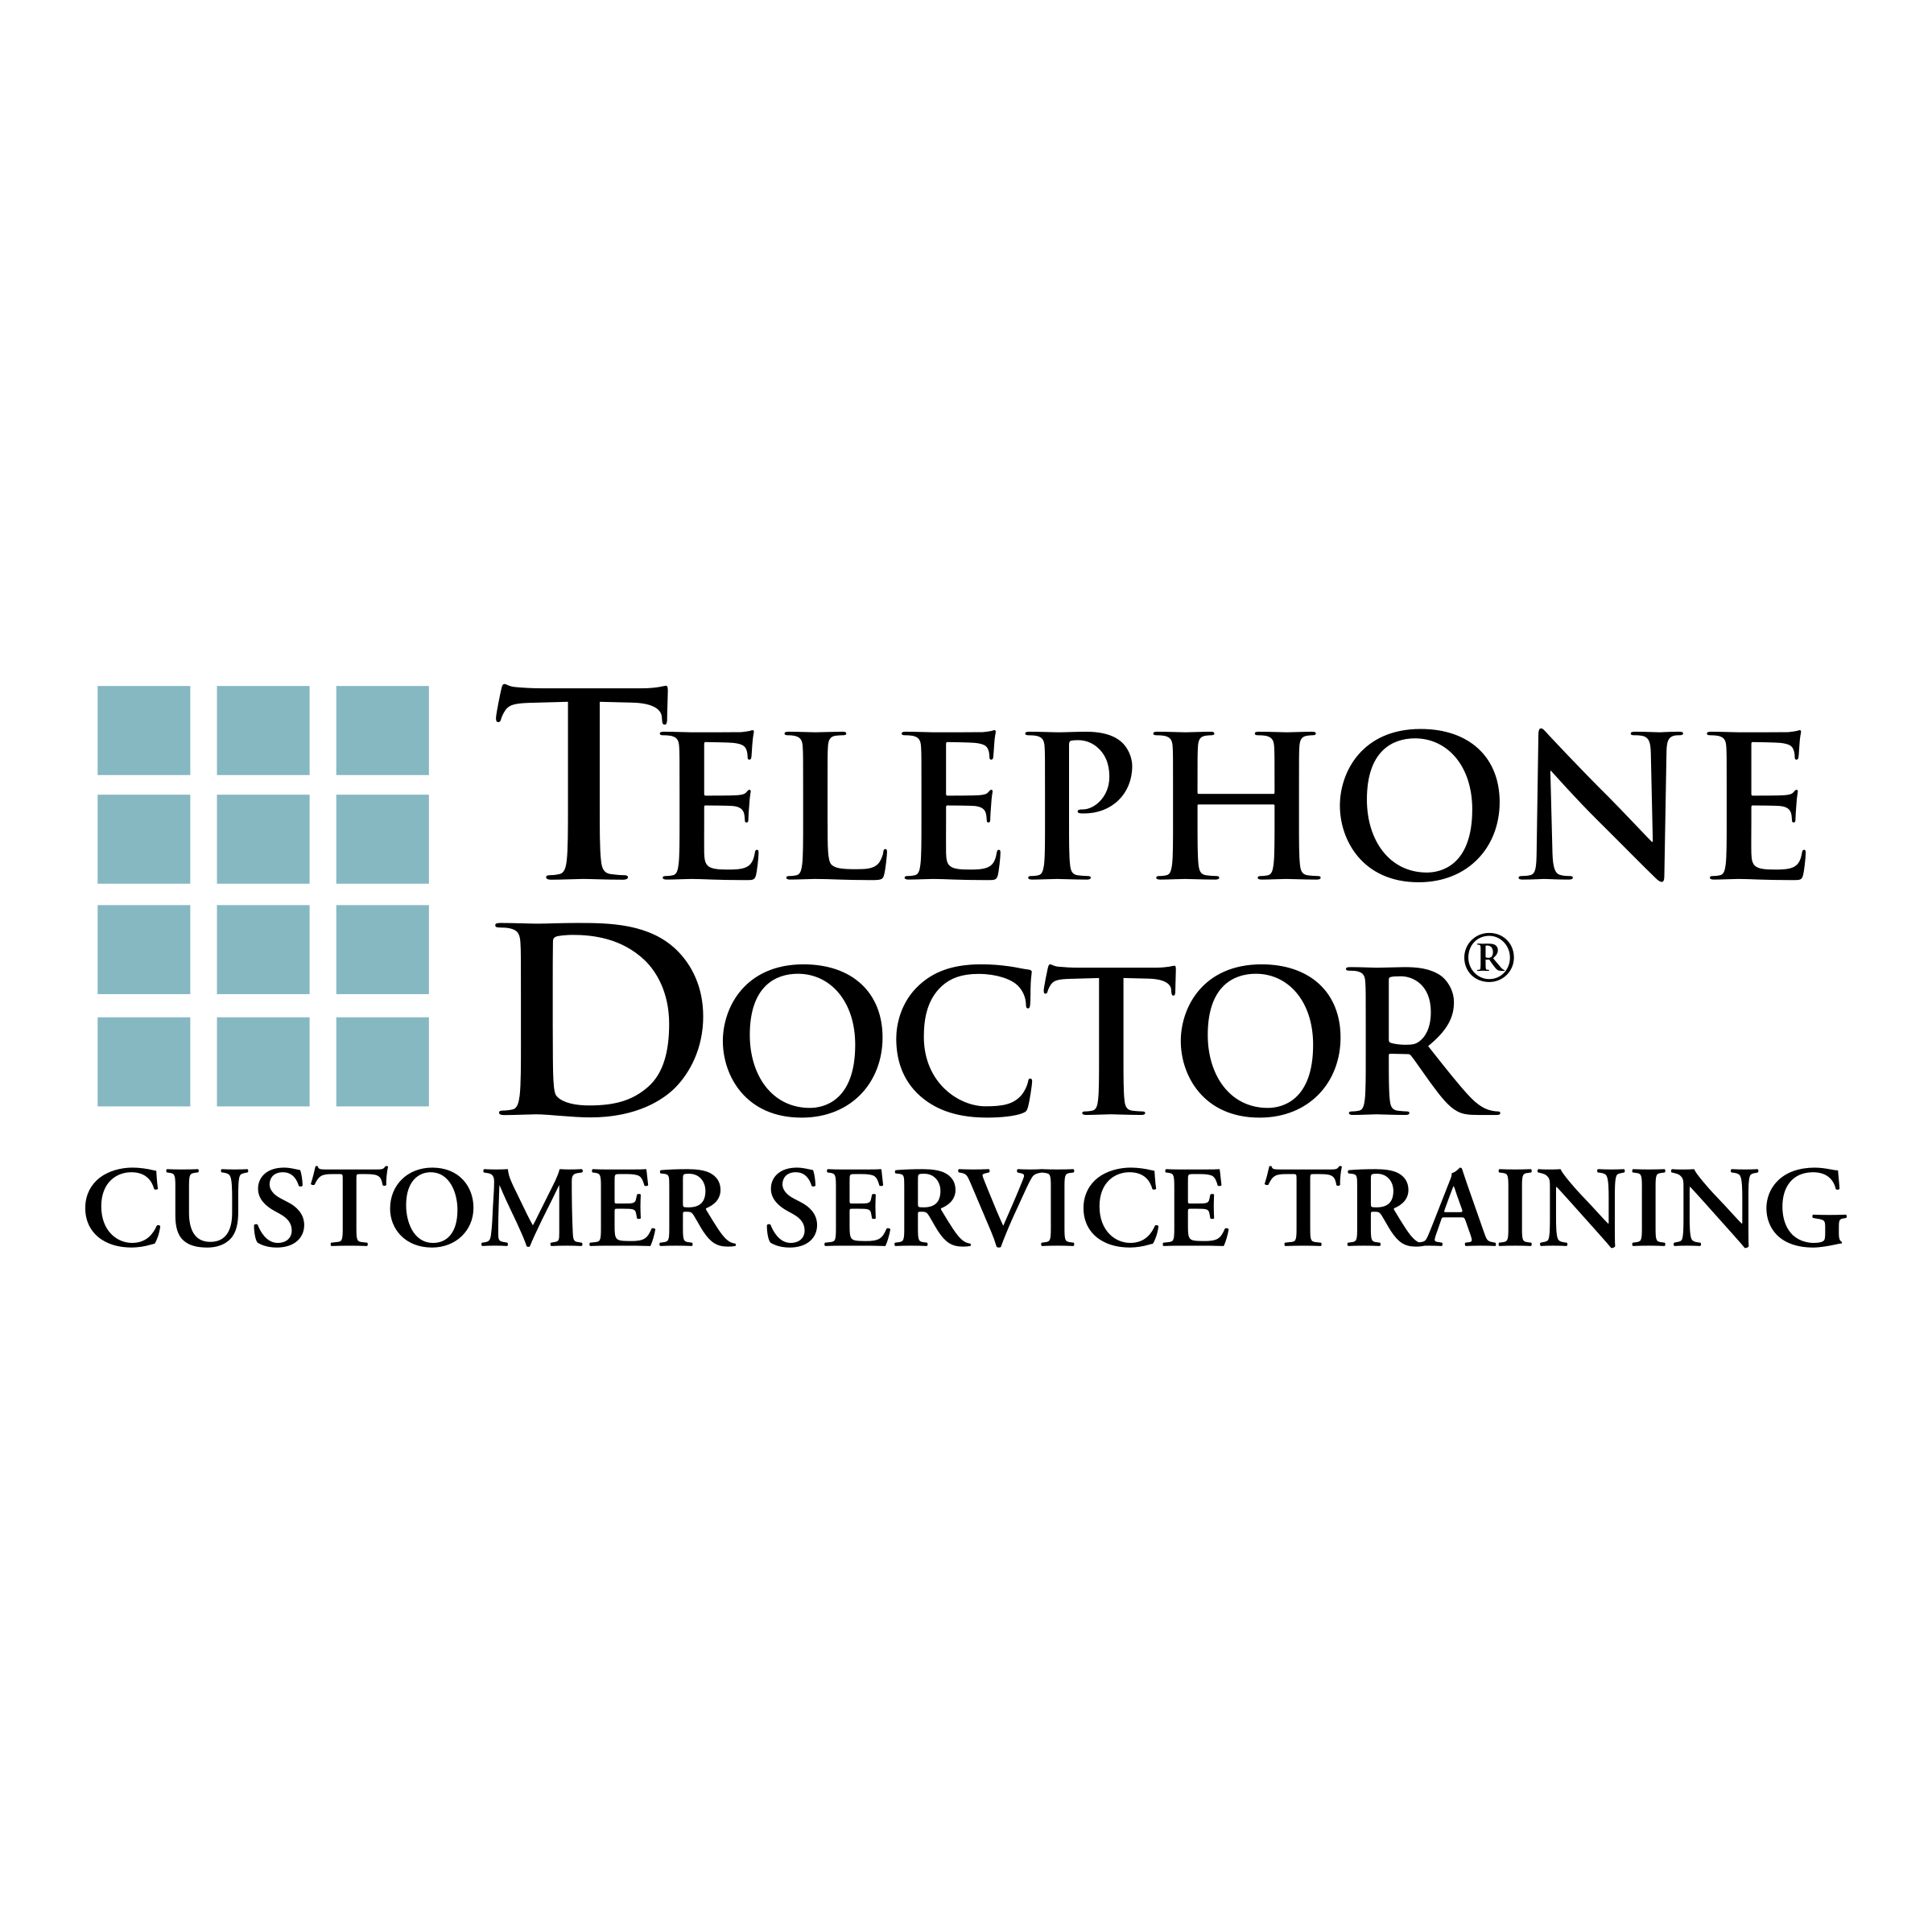 Telephone Transparent Logo - Telephone Doctor Logo PNG Transparent & SVG Vector